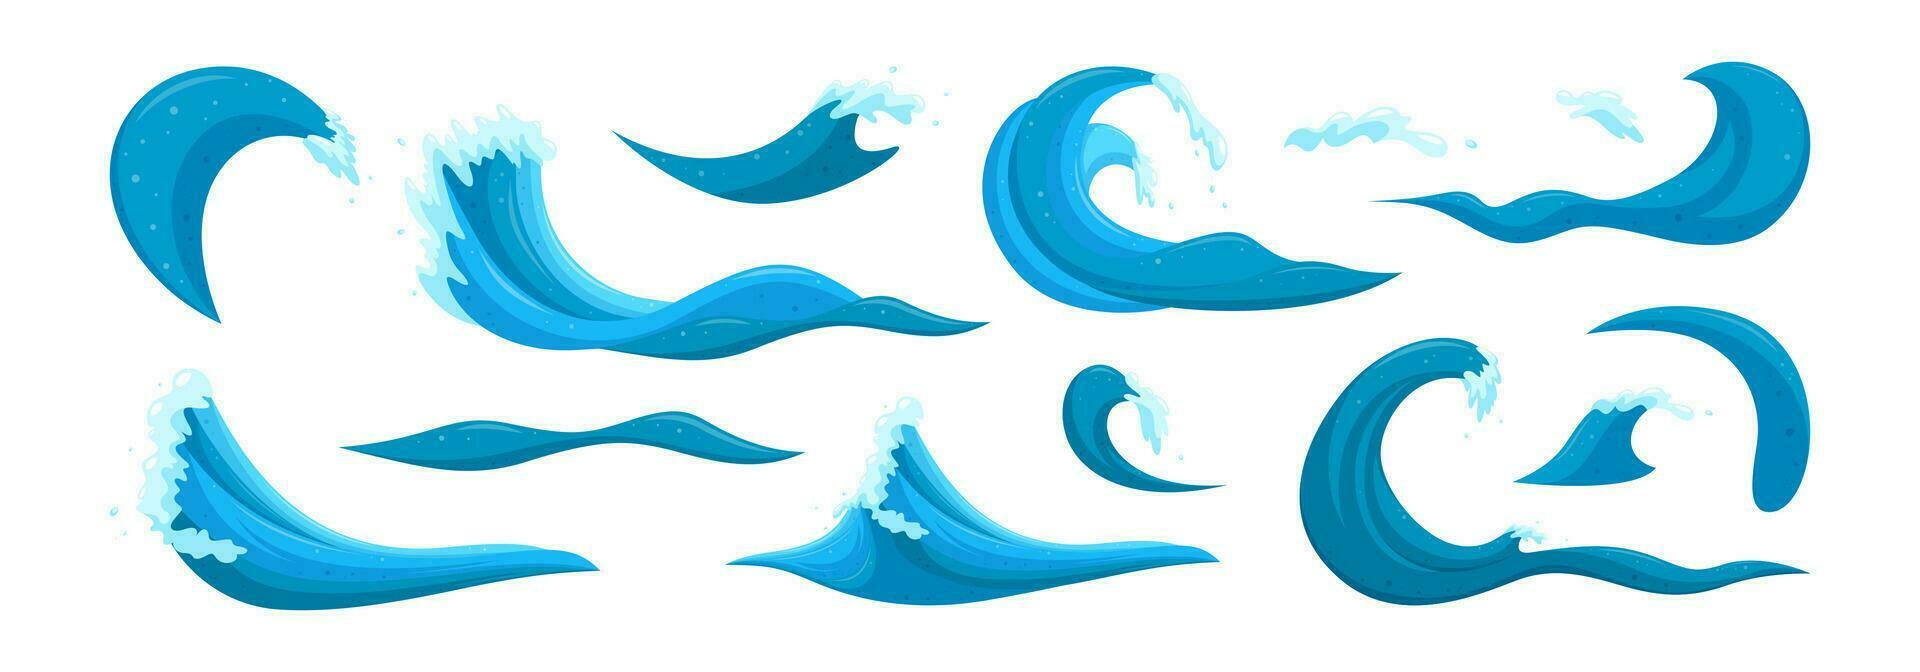 Tropical tsunami wave in cartoon style. Ocean surfing wave forming a barrel. Vector illustration